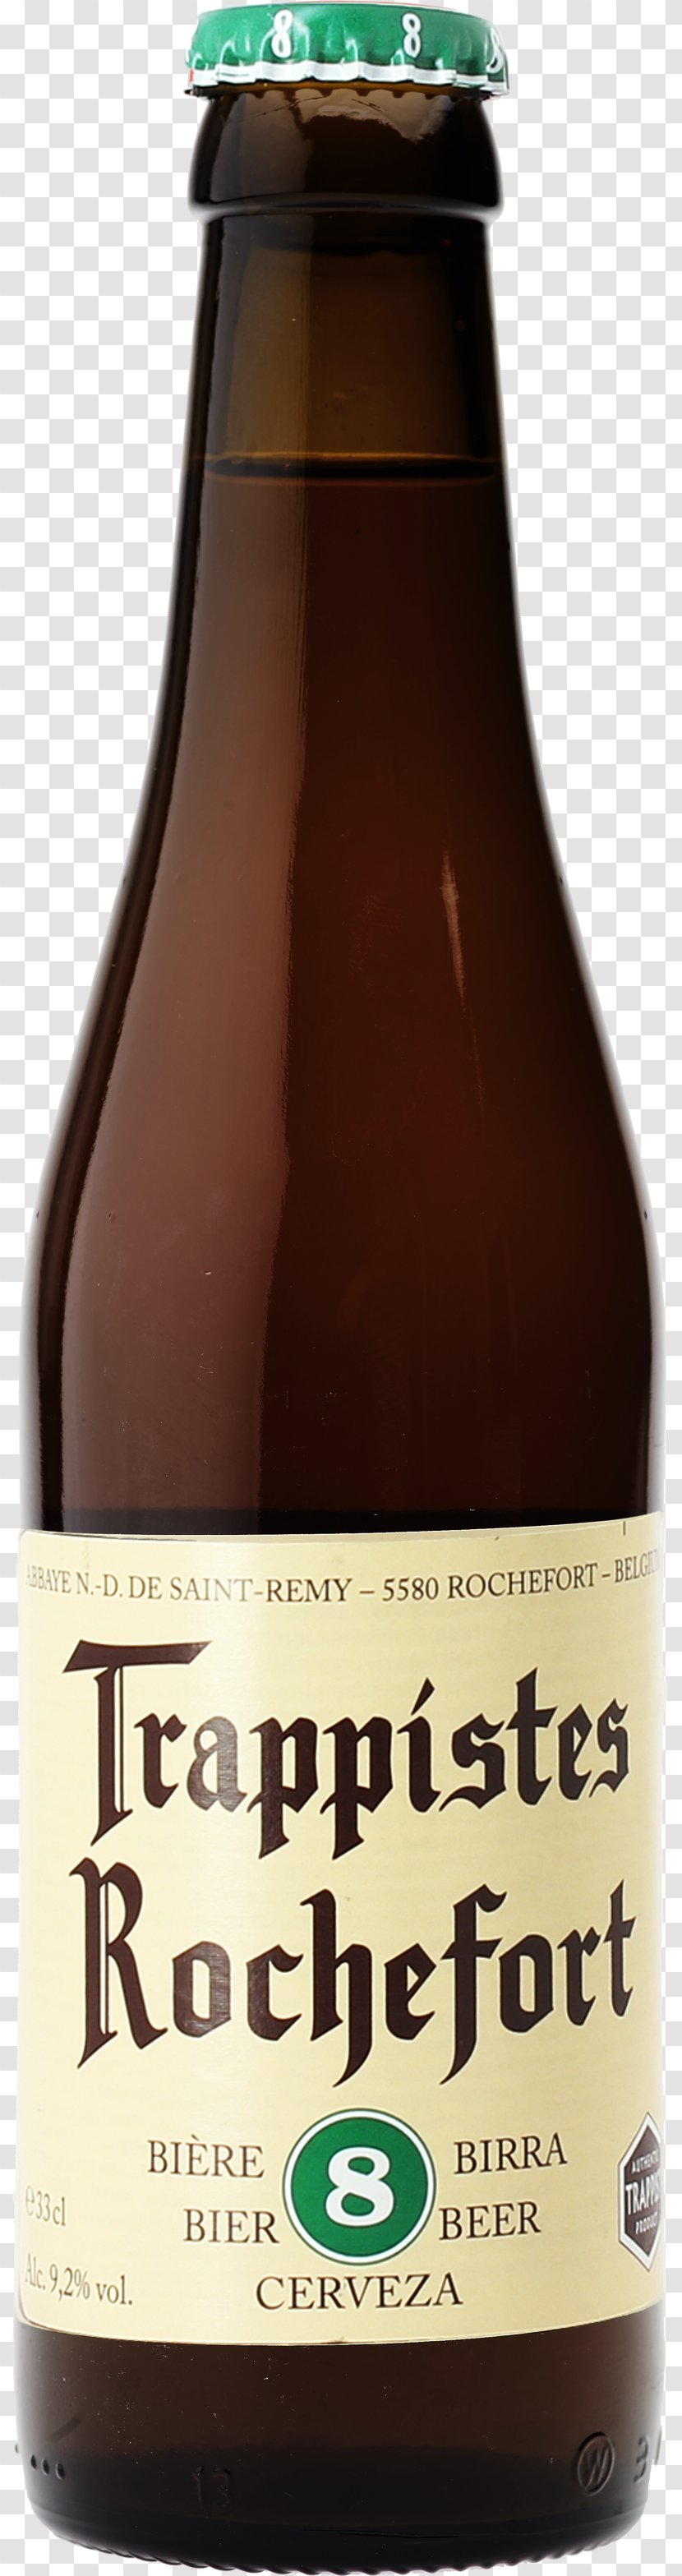 Ale Rochefort Brewery Beer Lambrusco Wine - Bottle - Craft Transparent PNG